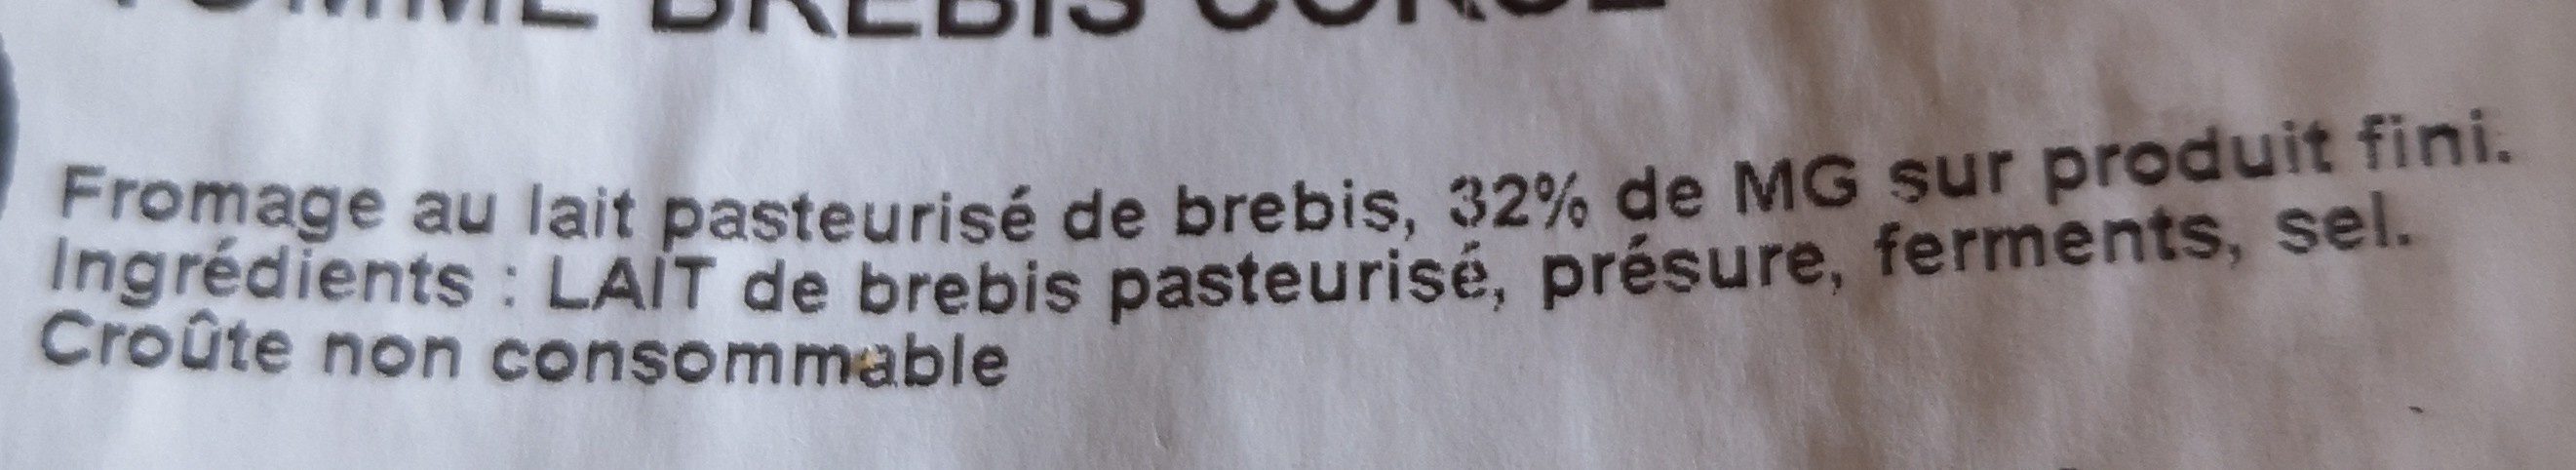 Tomme de brebis corse - Ingredients - fr